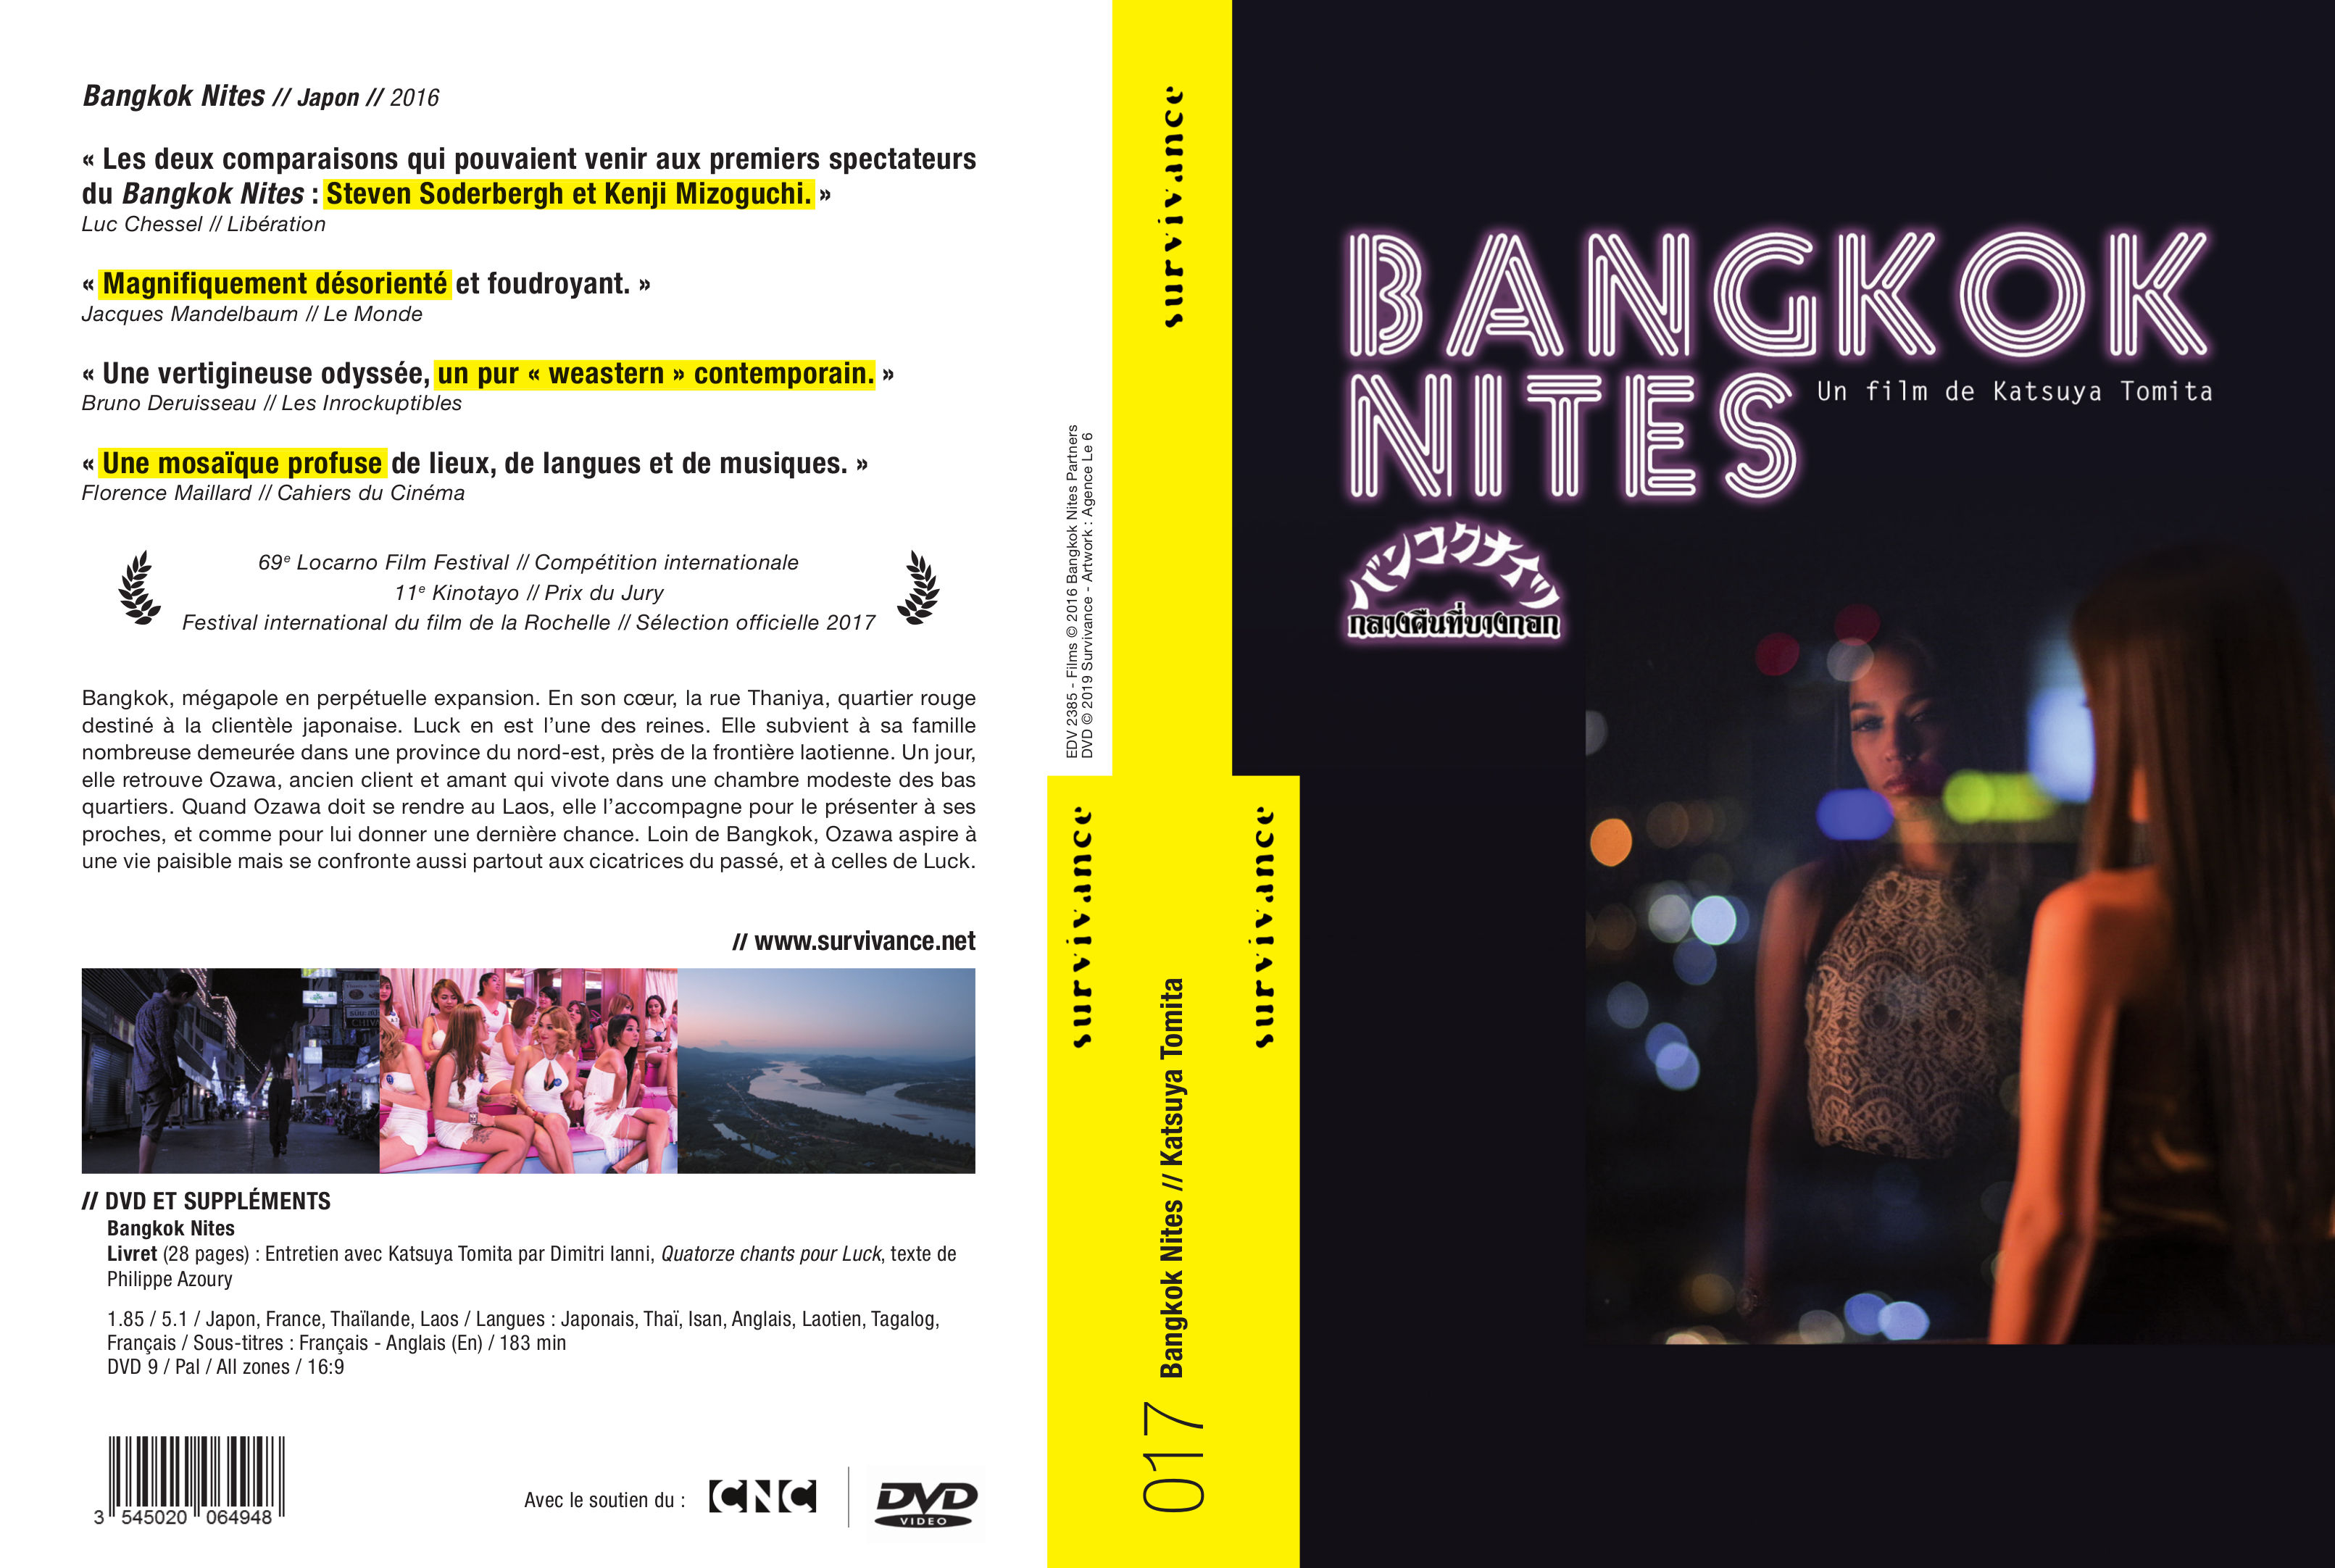 Jaquette DVD Bangkok nites